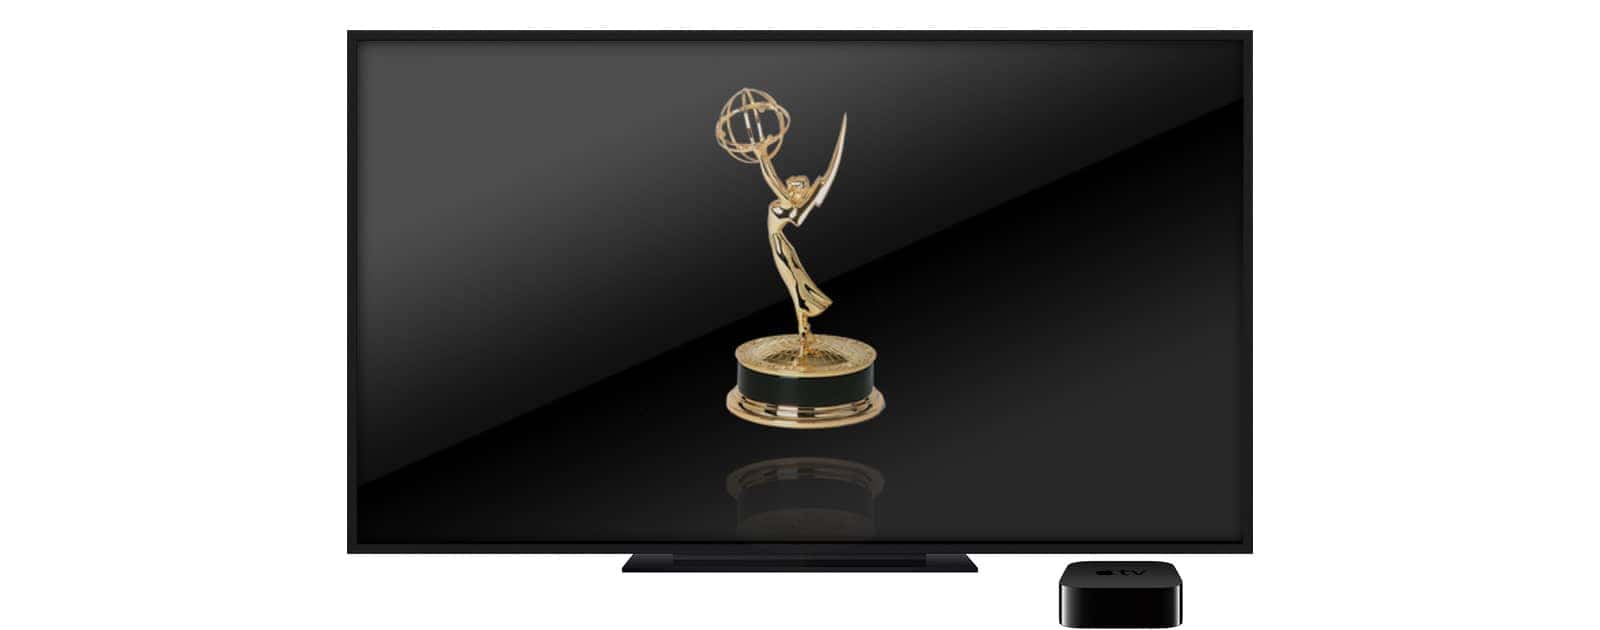 Apple Just Won an Emmy Award for Siri on Apple TV